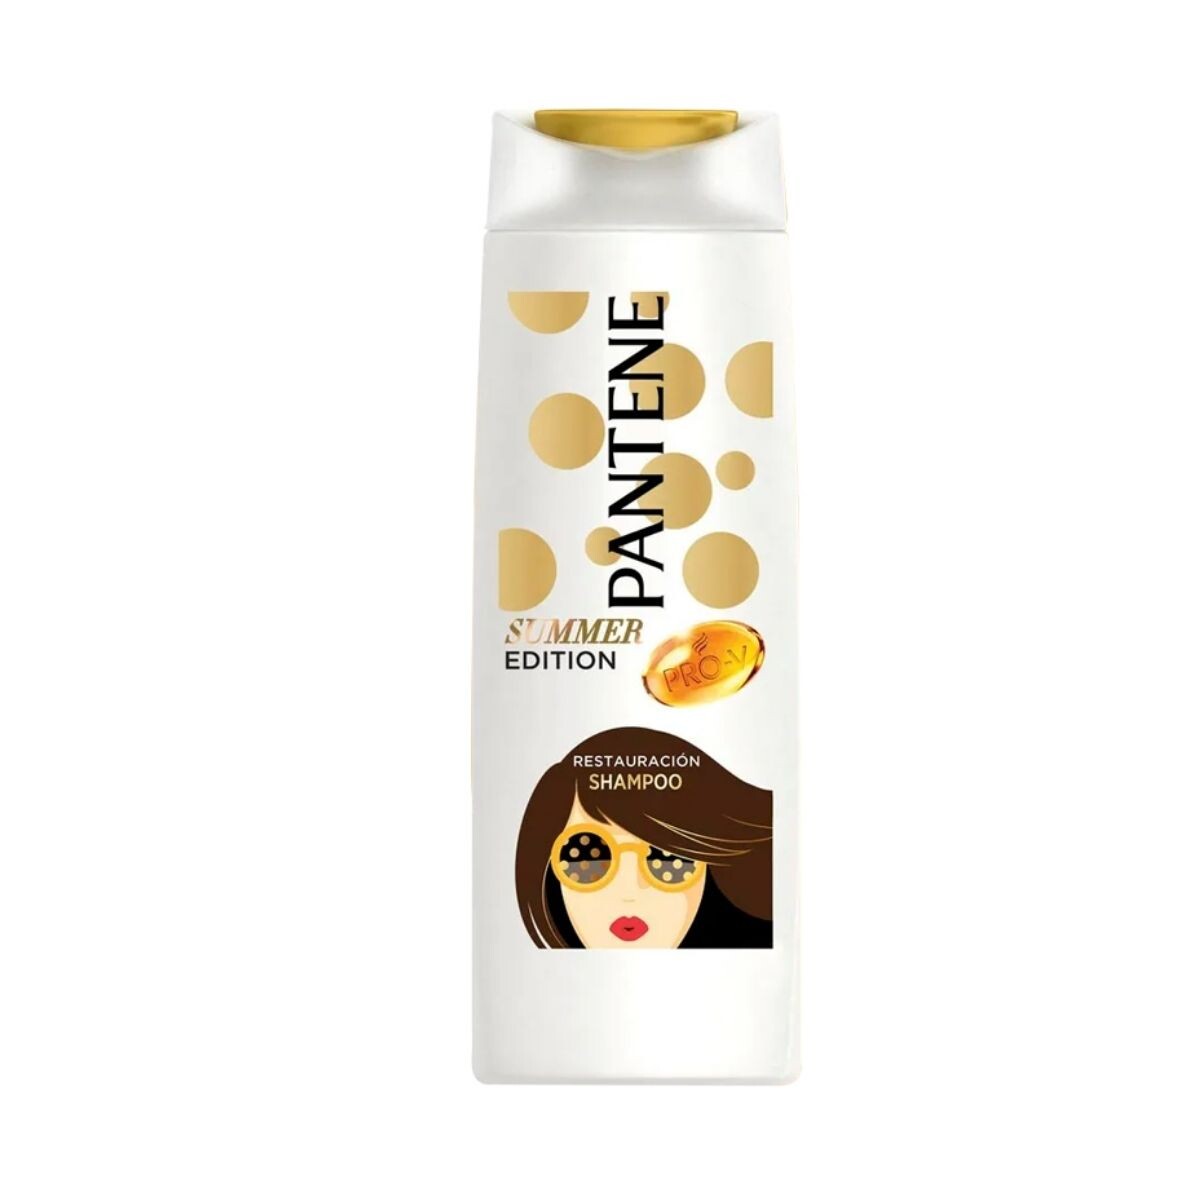 Shampoo Pantene Summer - 200 ML 